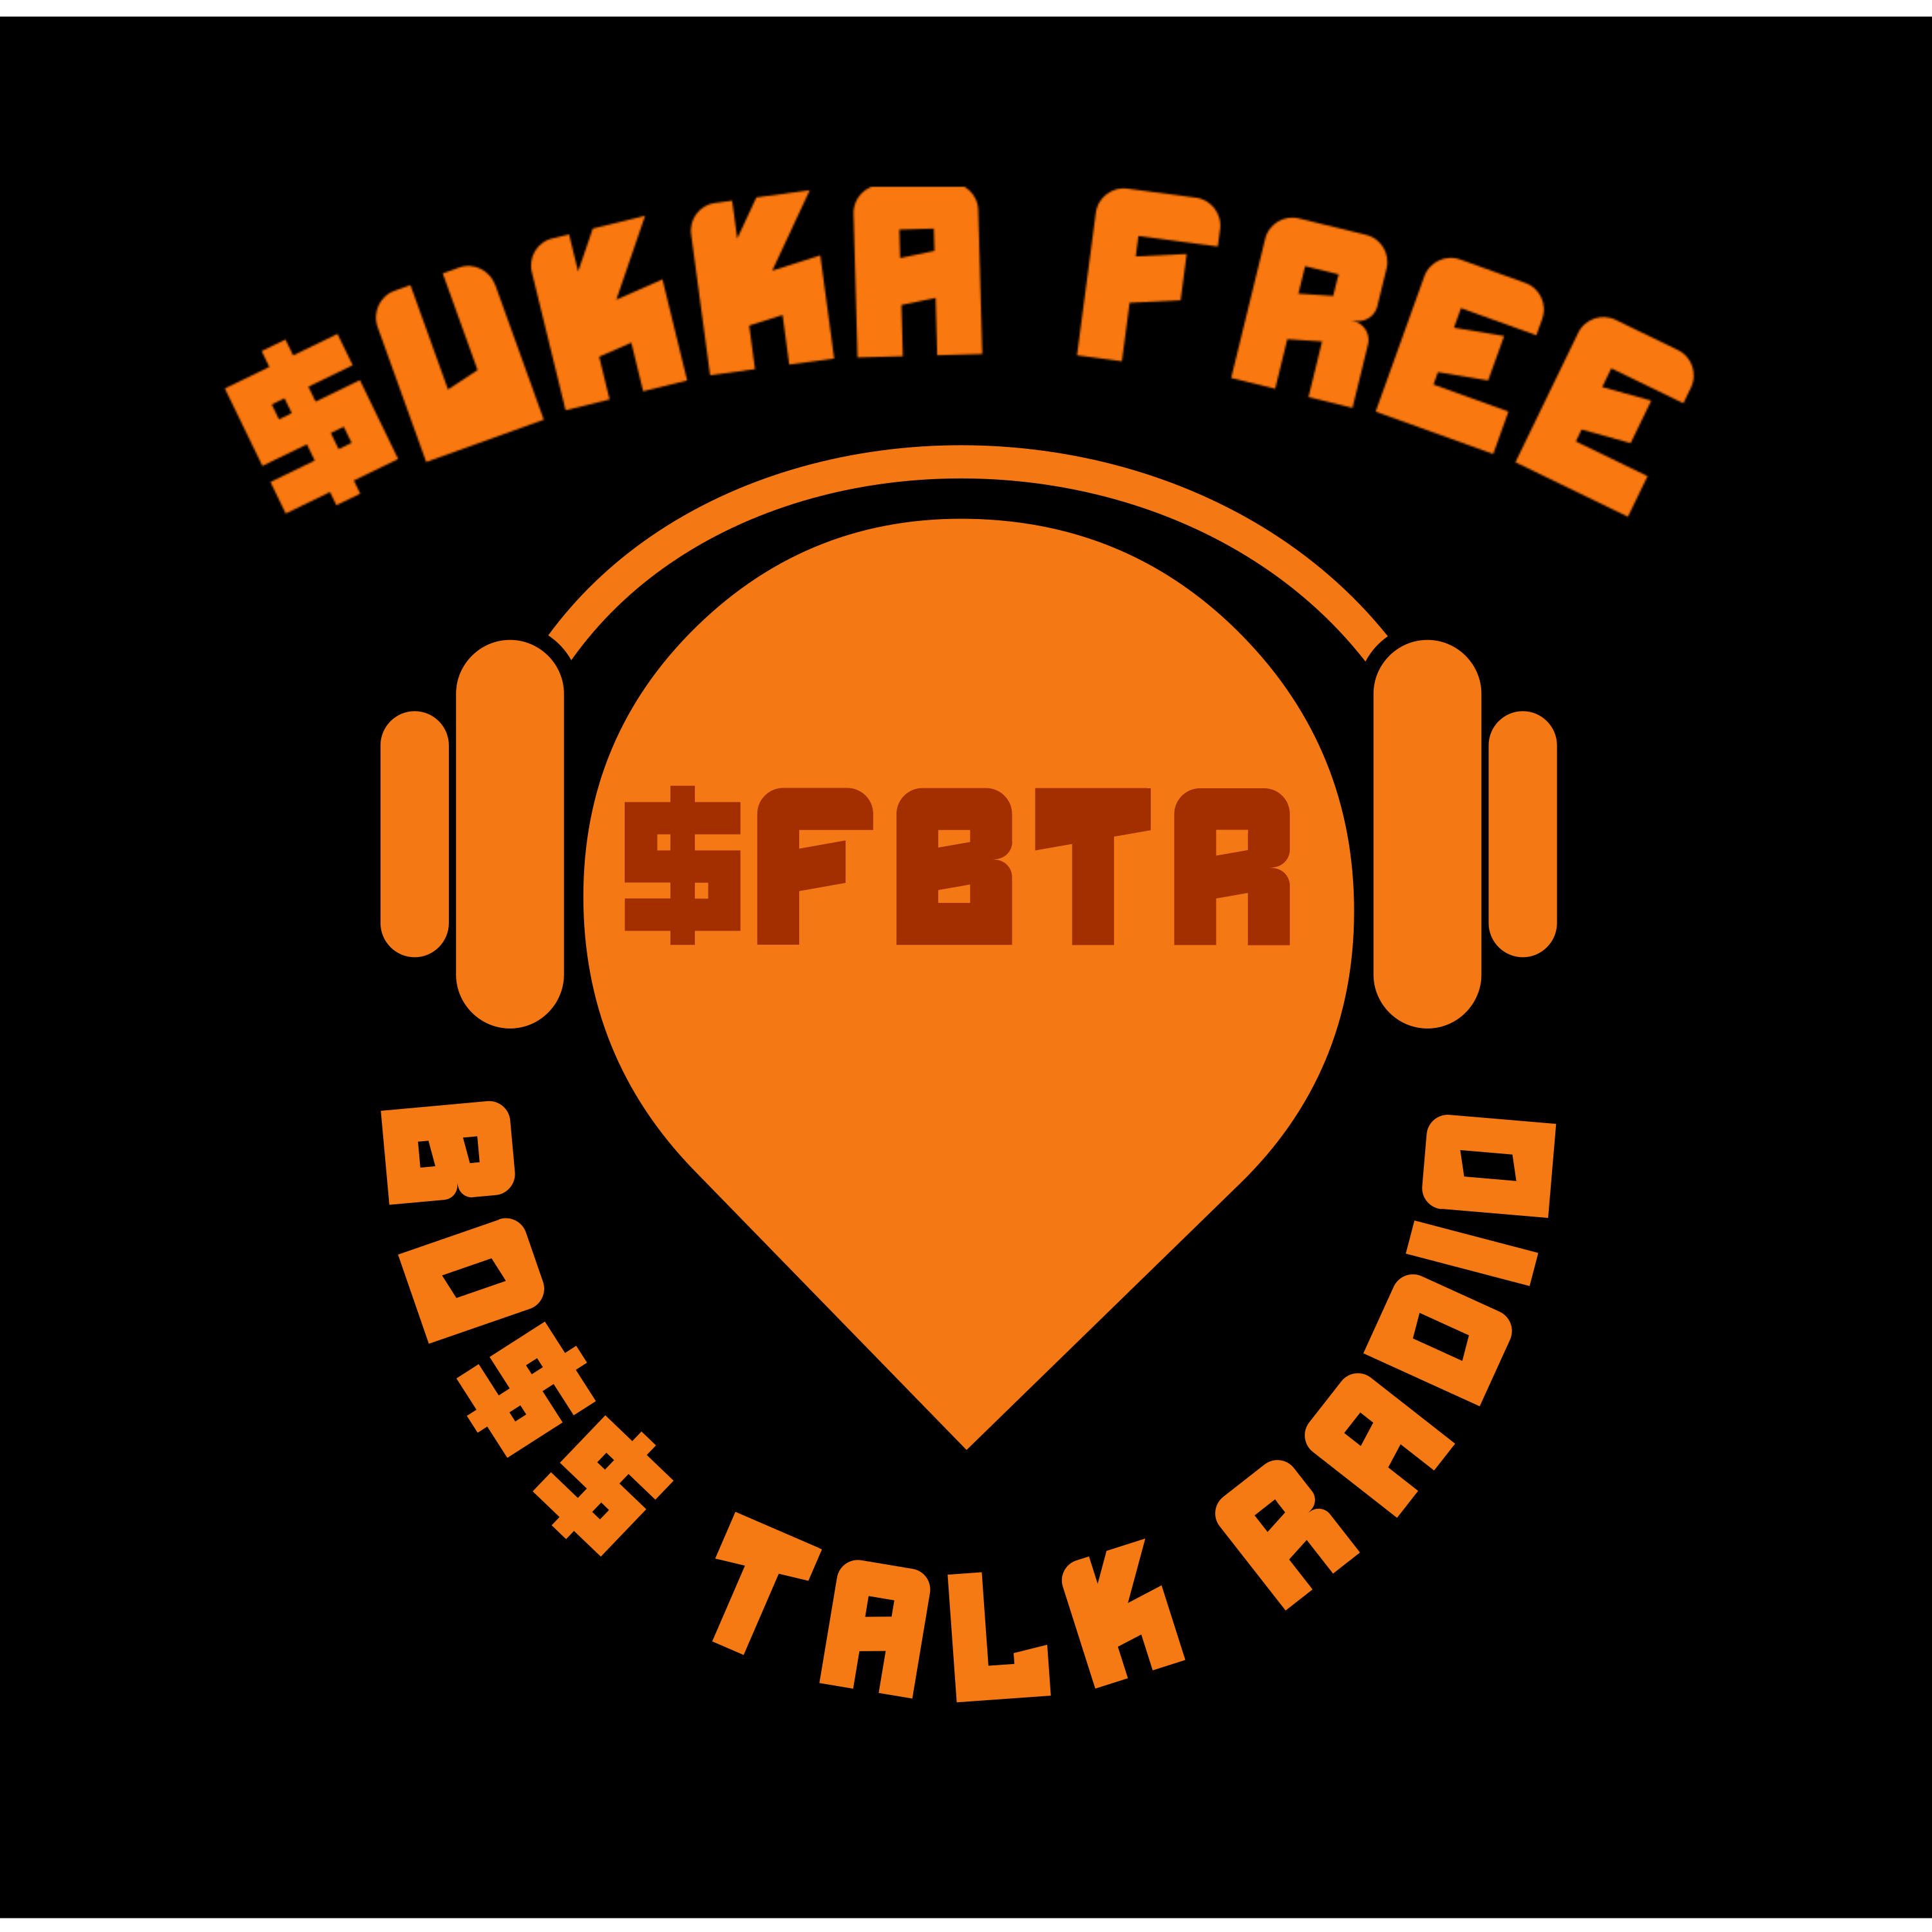 Show artwork for  {$UKKA FREE BO$$ TALK RADIO}